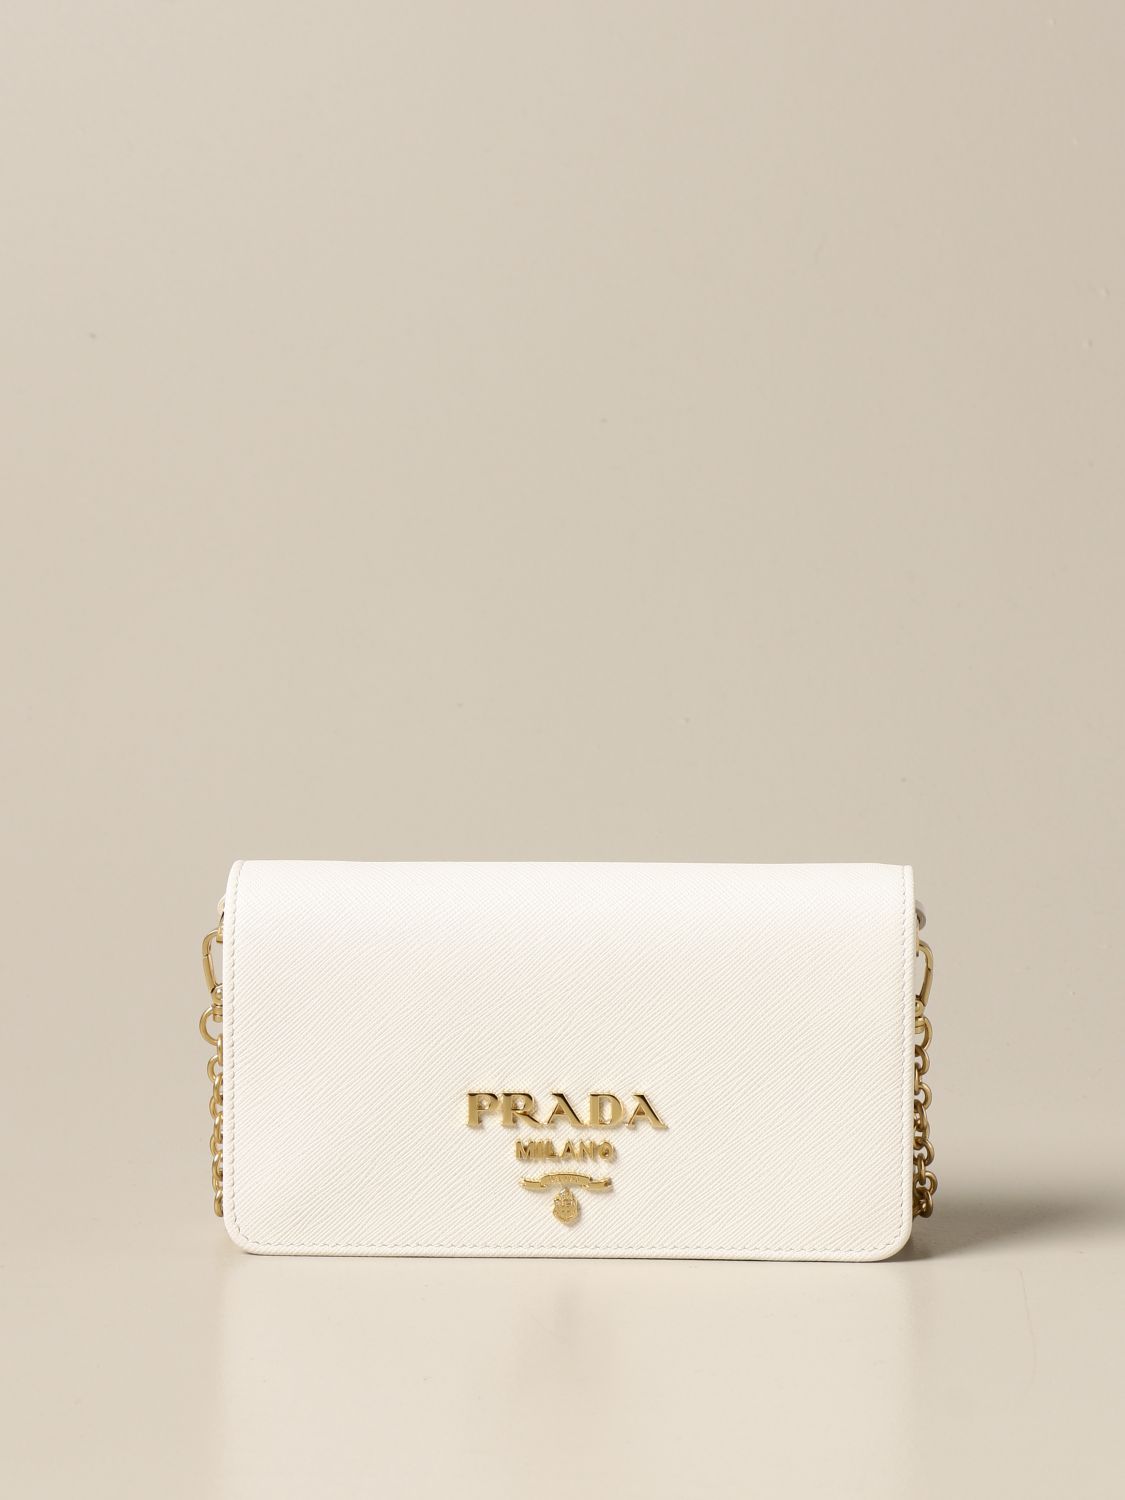 PRADA: shoulder bag in saffiano leather - Black  Prada mini bag 1BP023 FOO  NZV online at